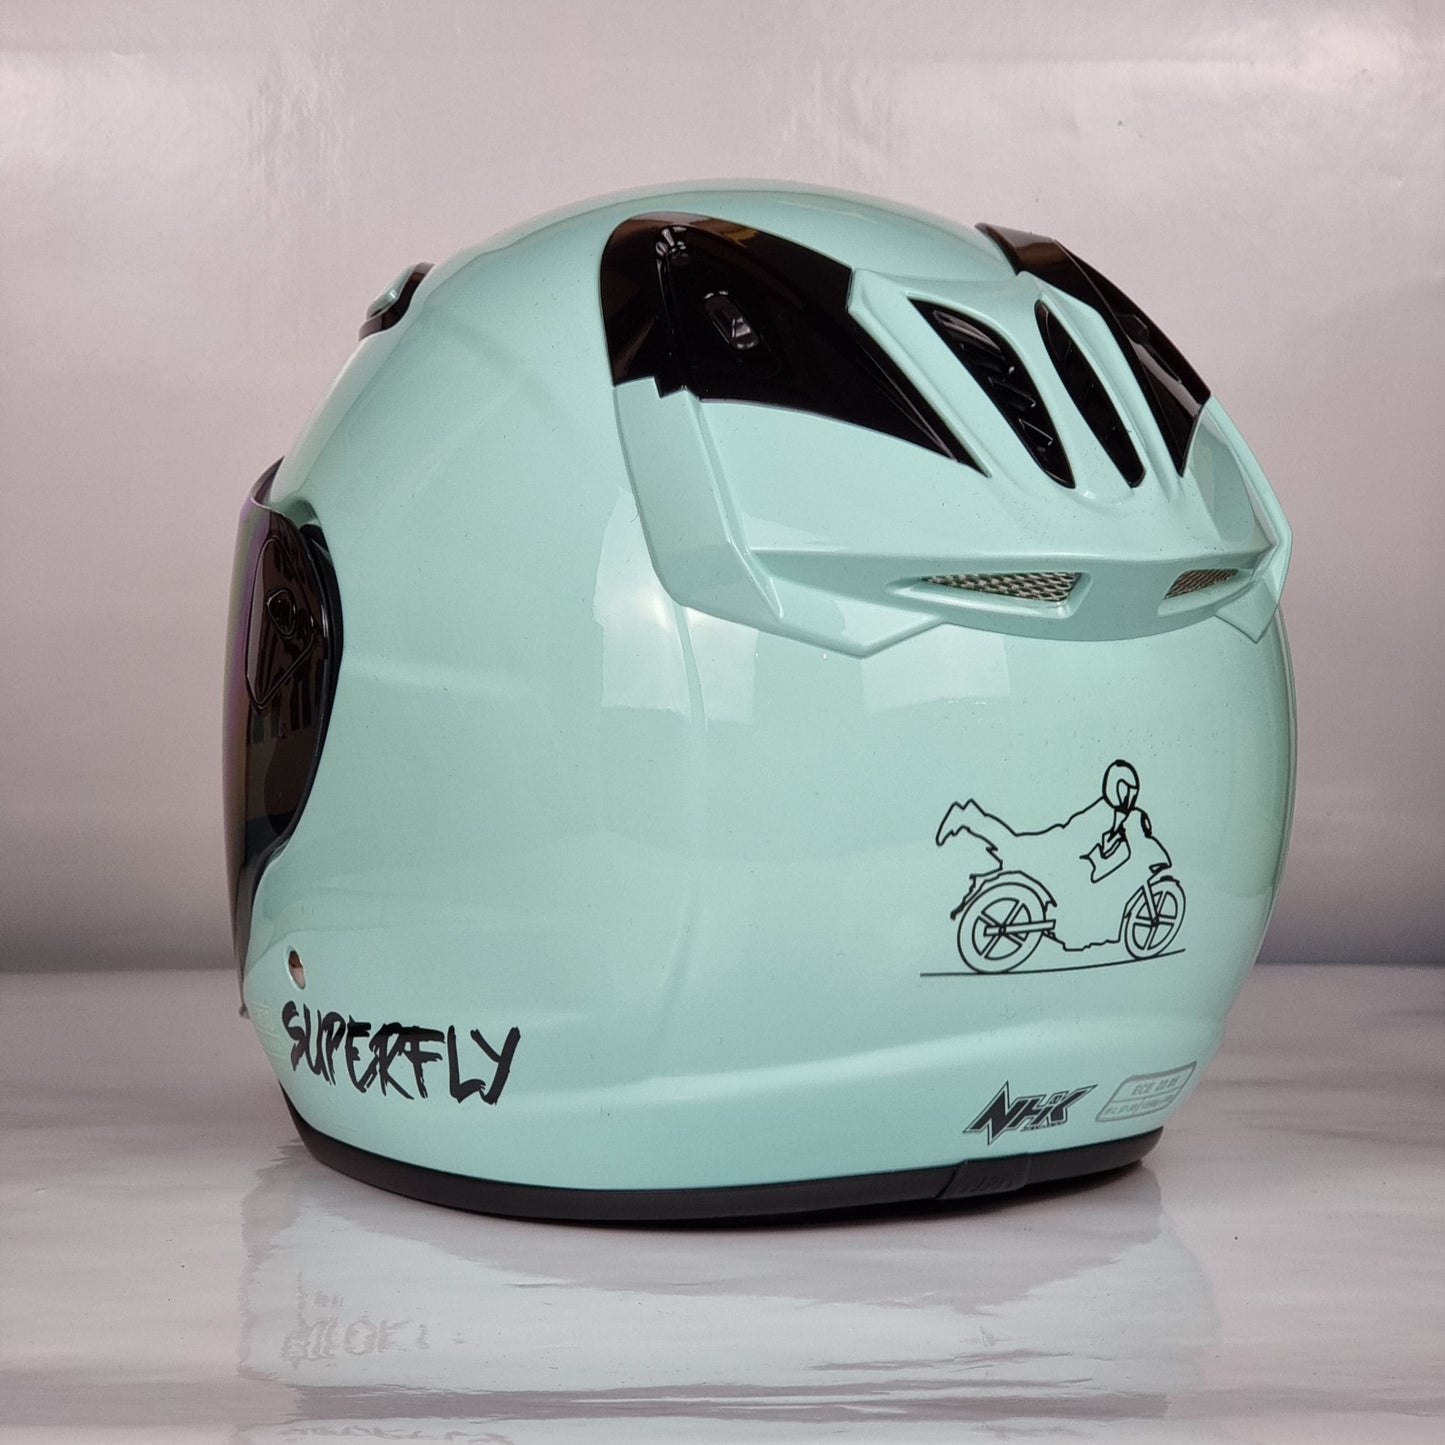 NHK Helmet X SUPERFLY R6 v2 Solid (Nardo Green Glossy)